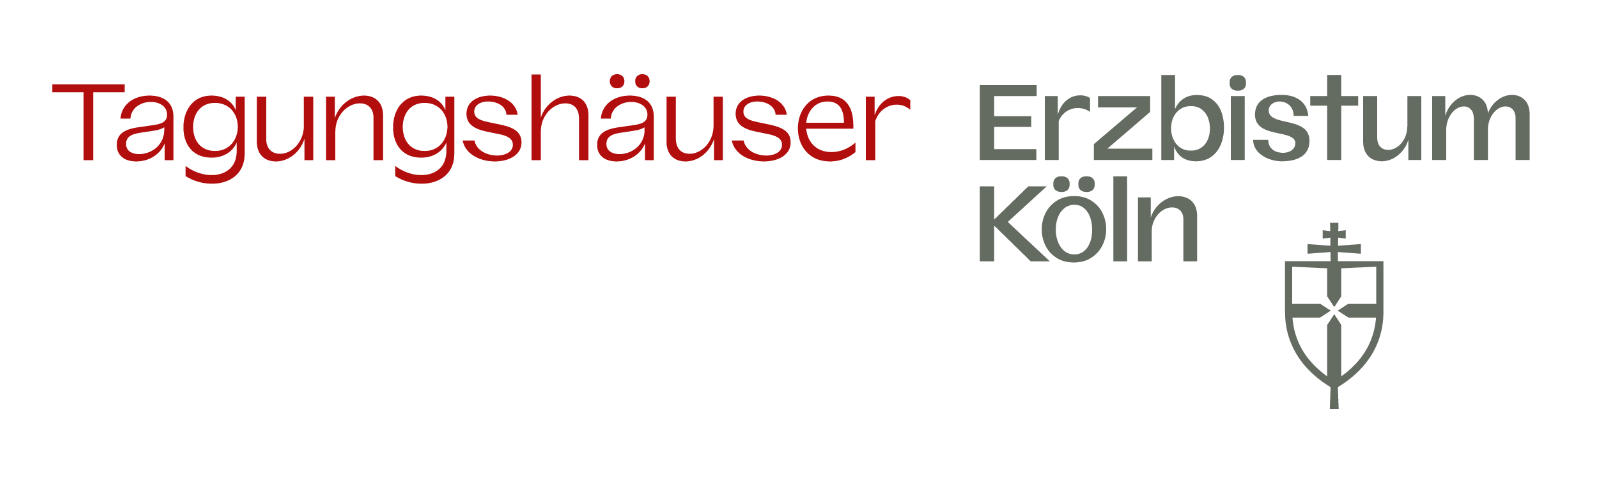 Logo EBK Tagungshäuser